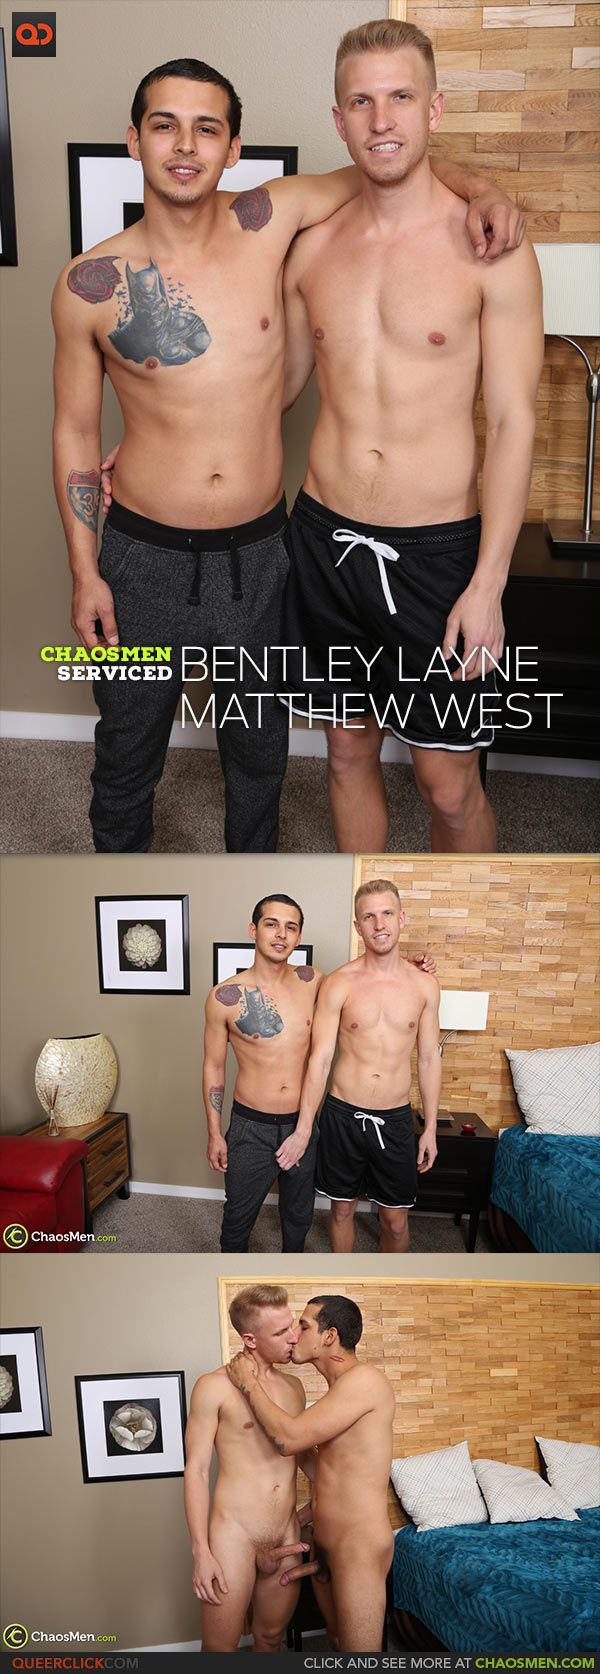 ChaosMen: Bentley Layne and Matthew West - Serviced